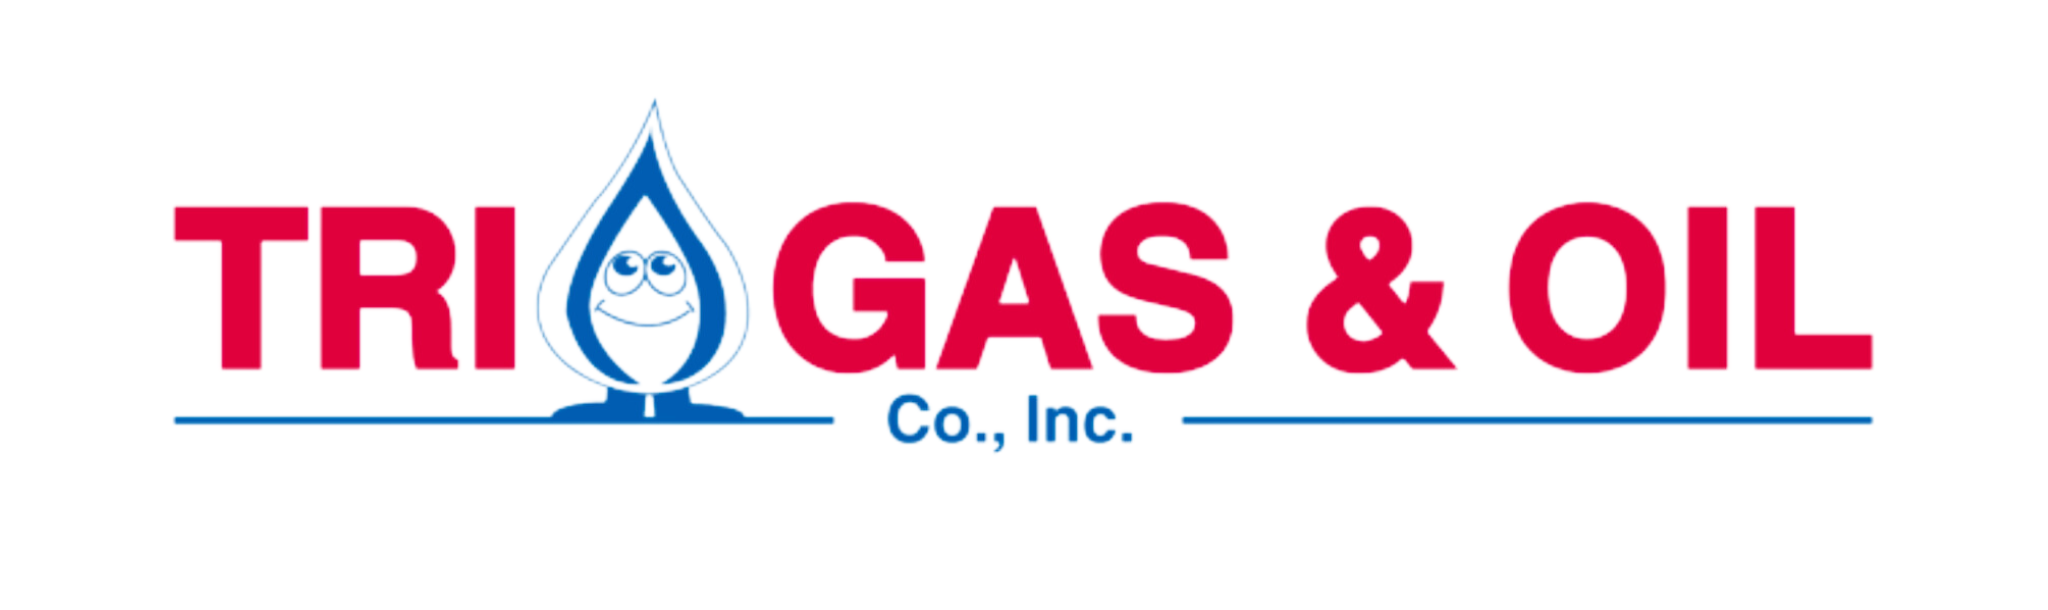 tri gas and oil logo